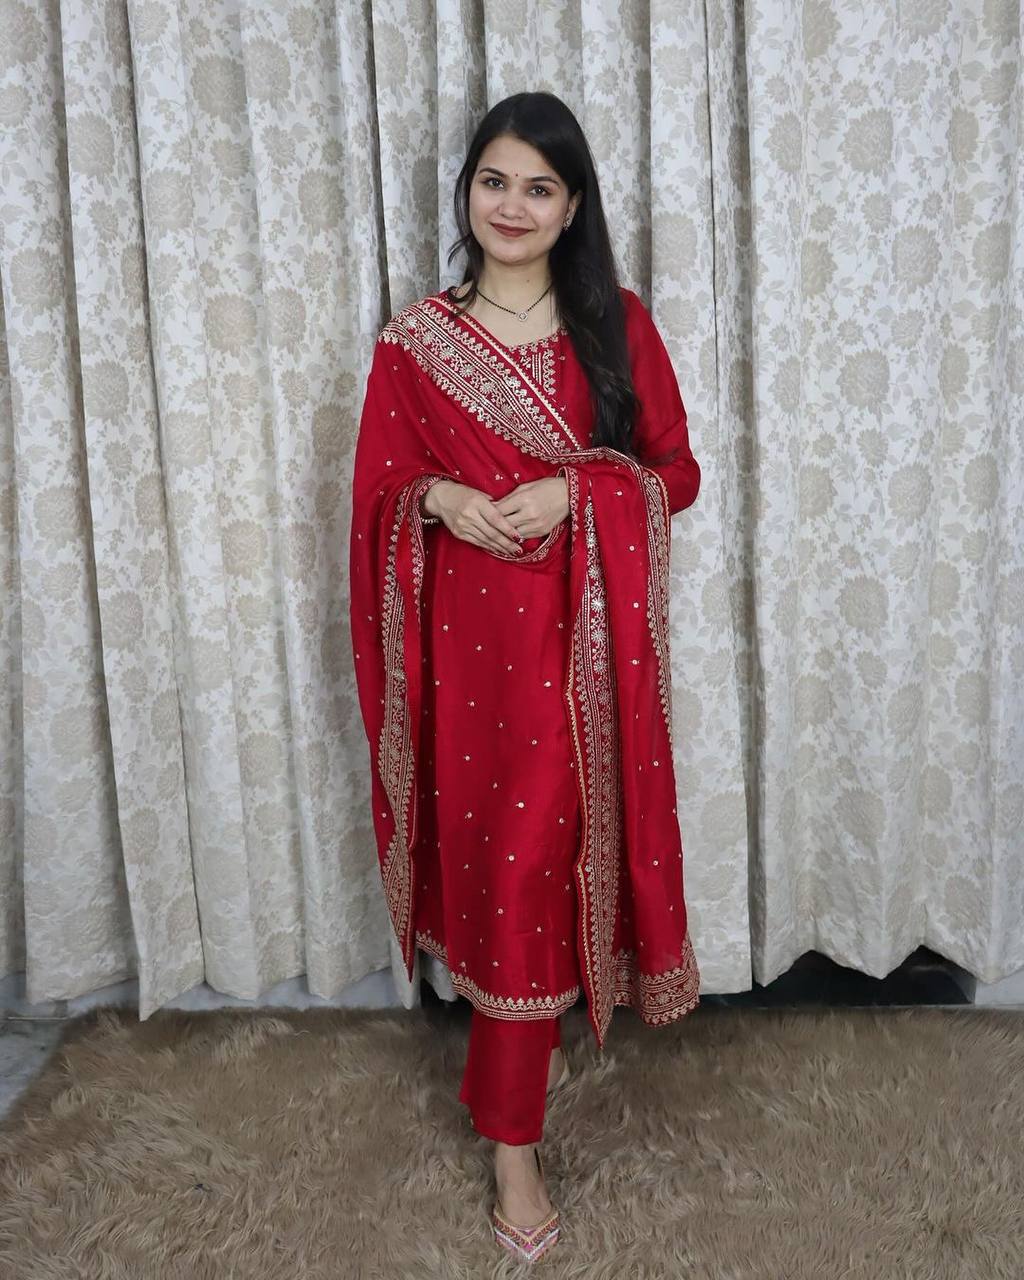 Trisha Krishnan to Ananya Panday: Fashionistas show how to wear a red sari  this Karwa Chauth | Times of India